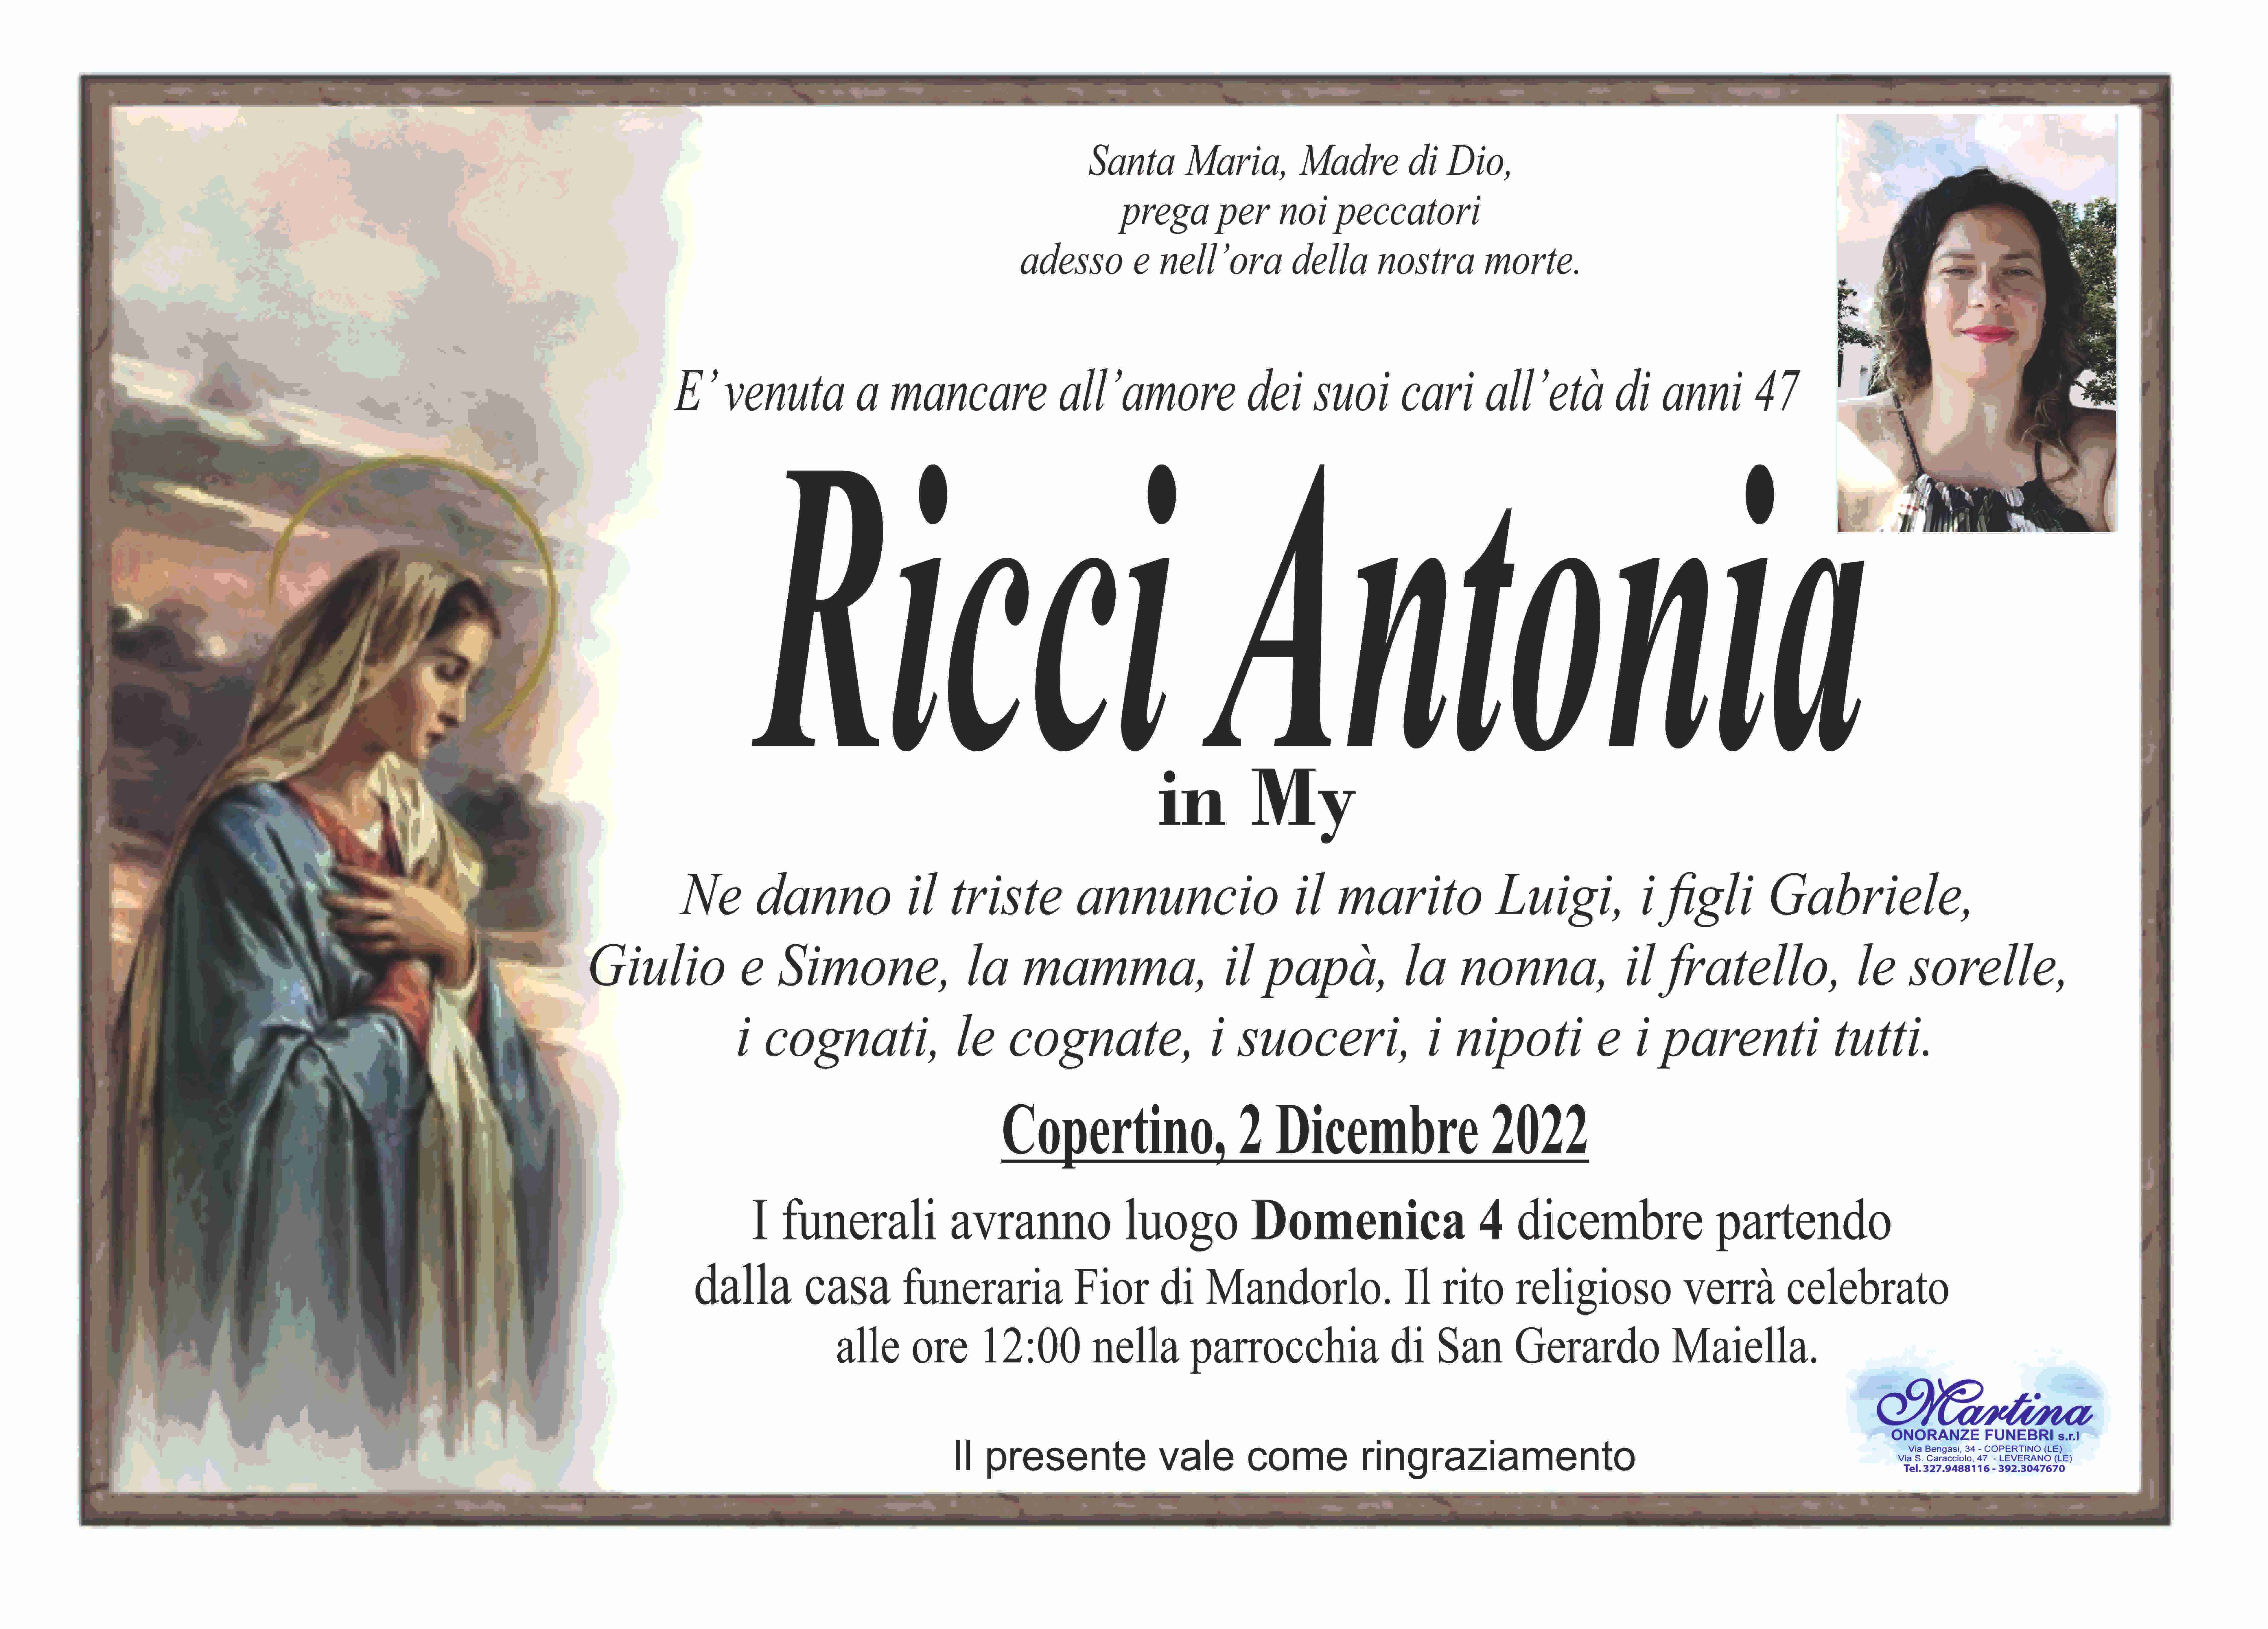 Antonia Ricci